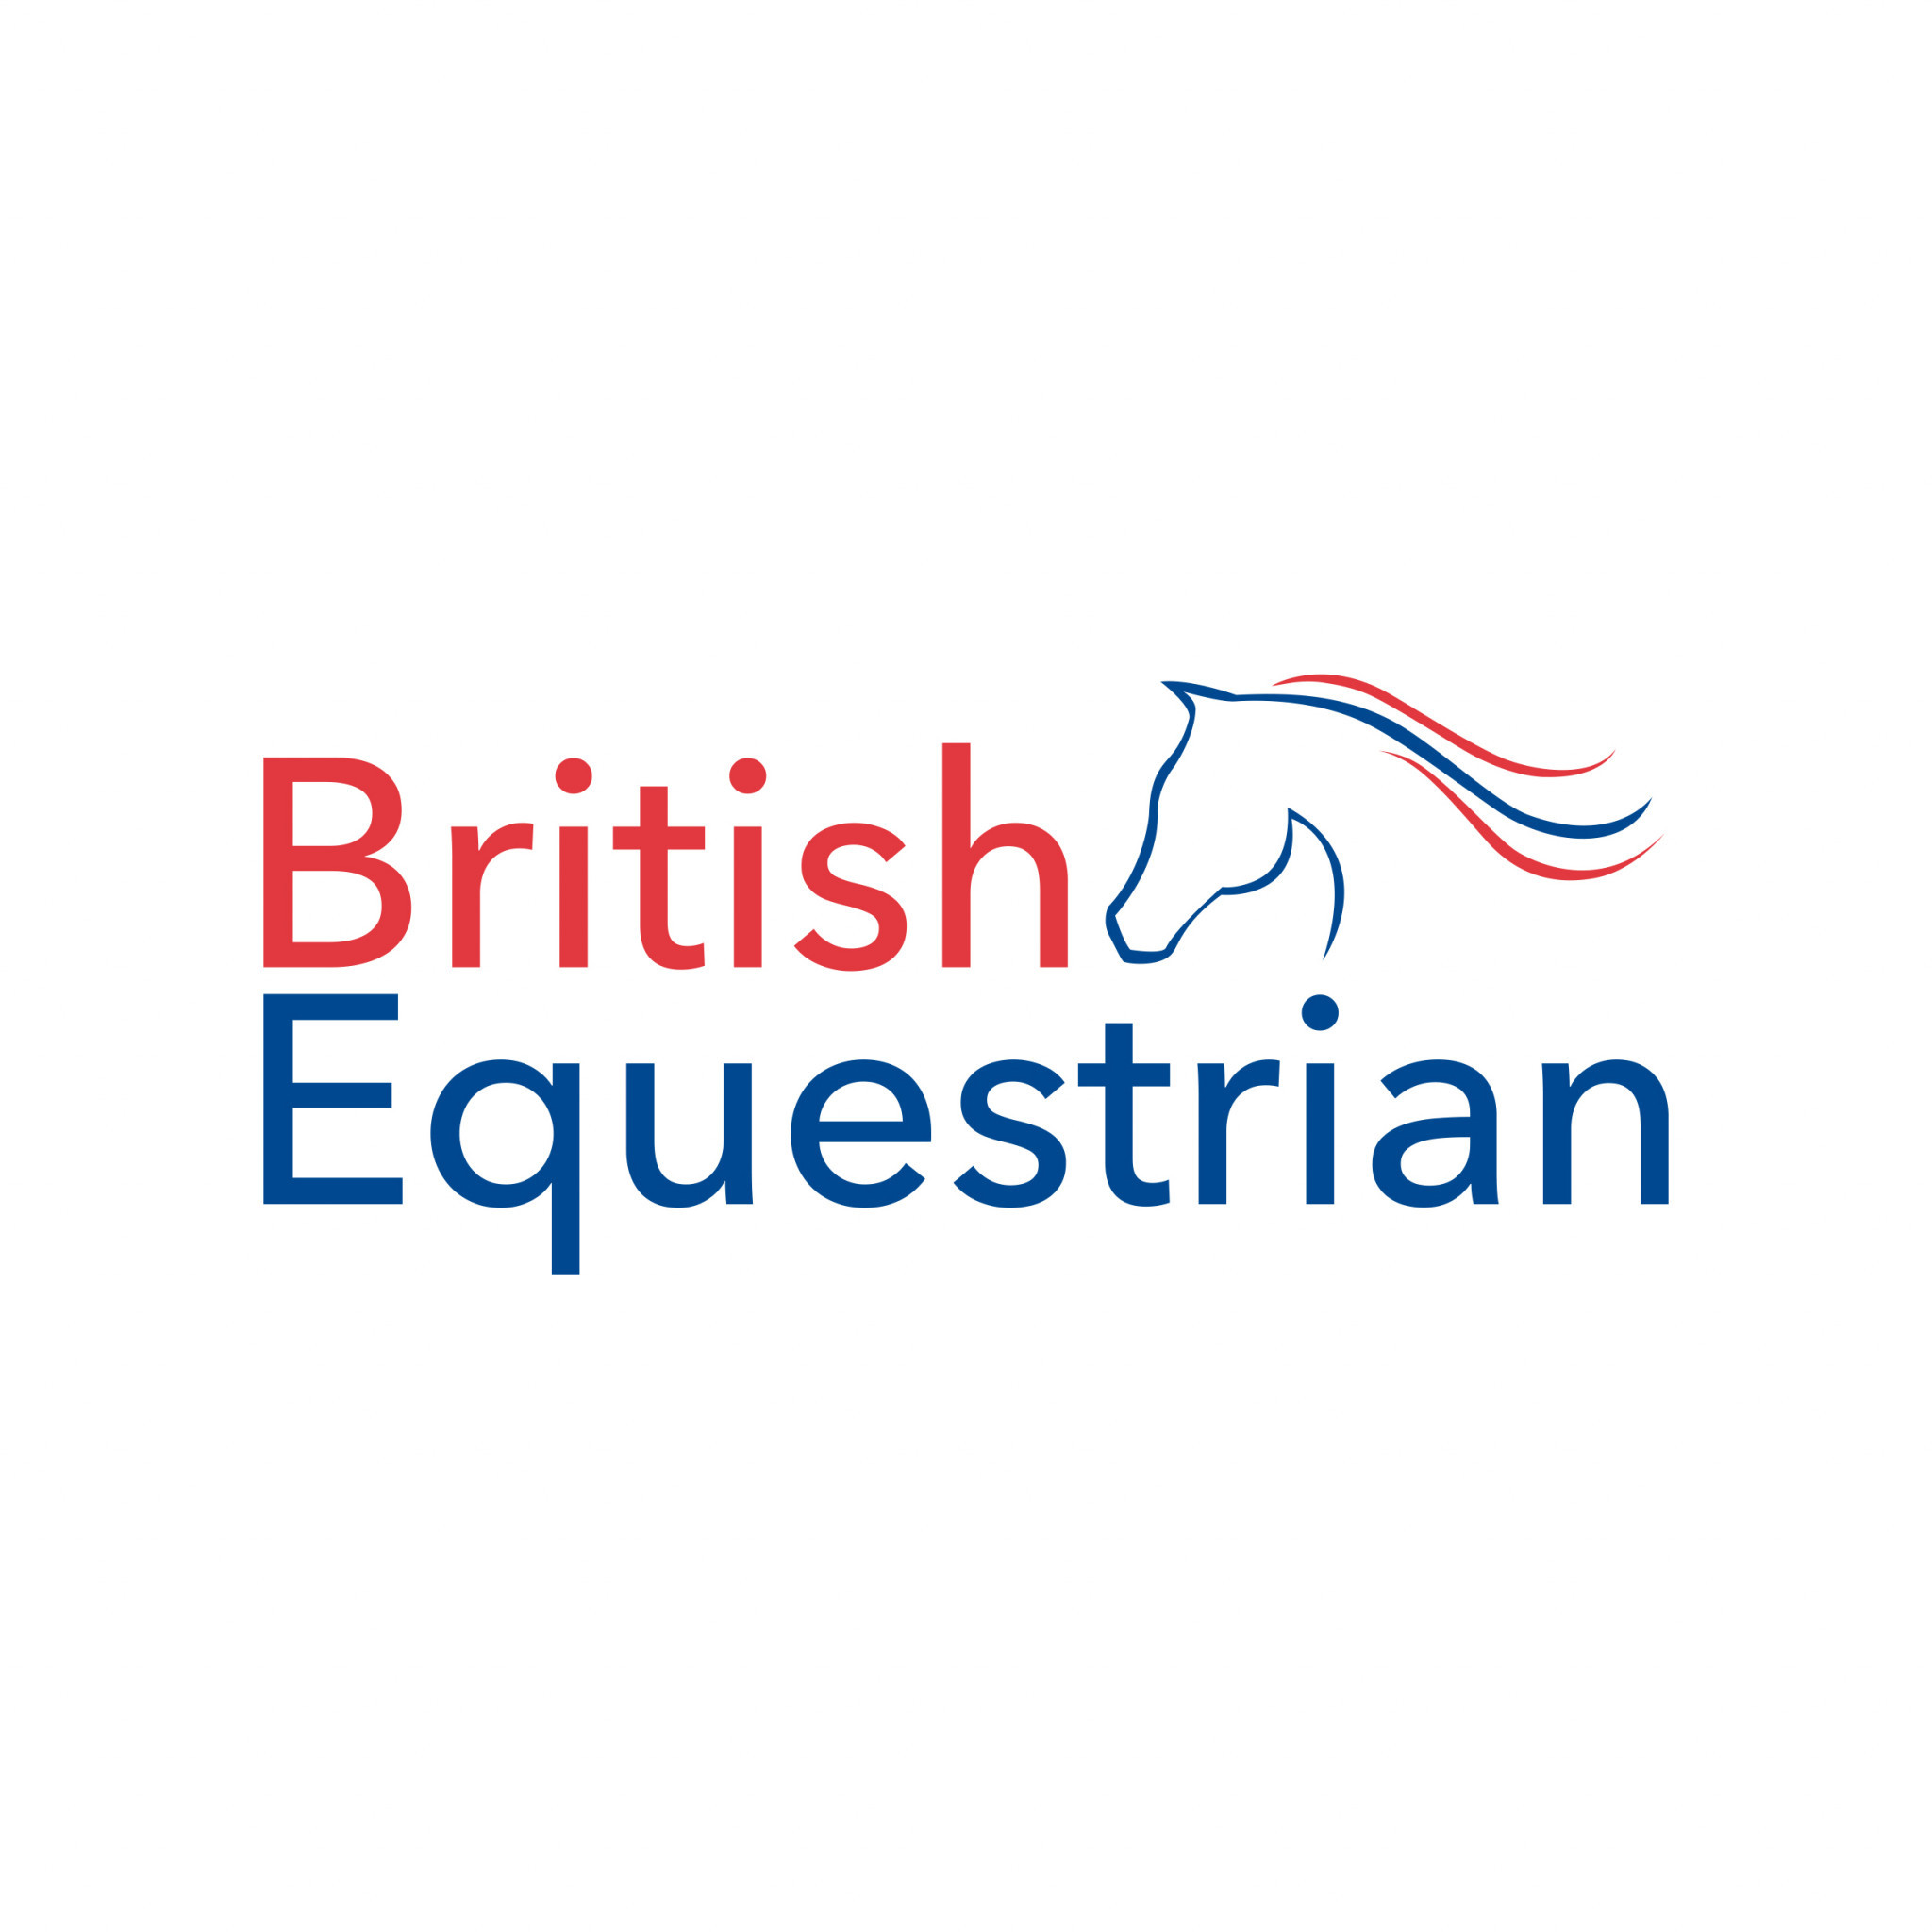 British Equestrian unveiled their new logo ©BEF